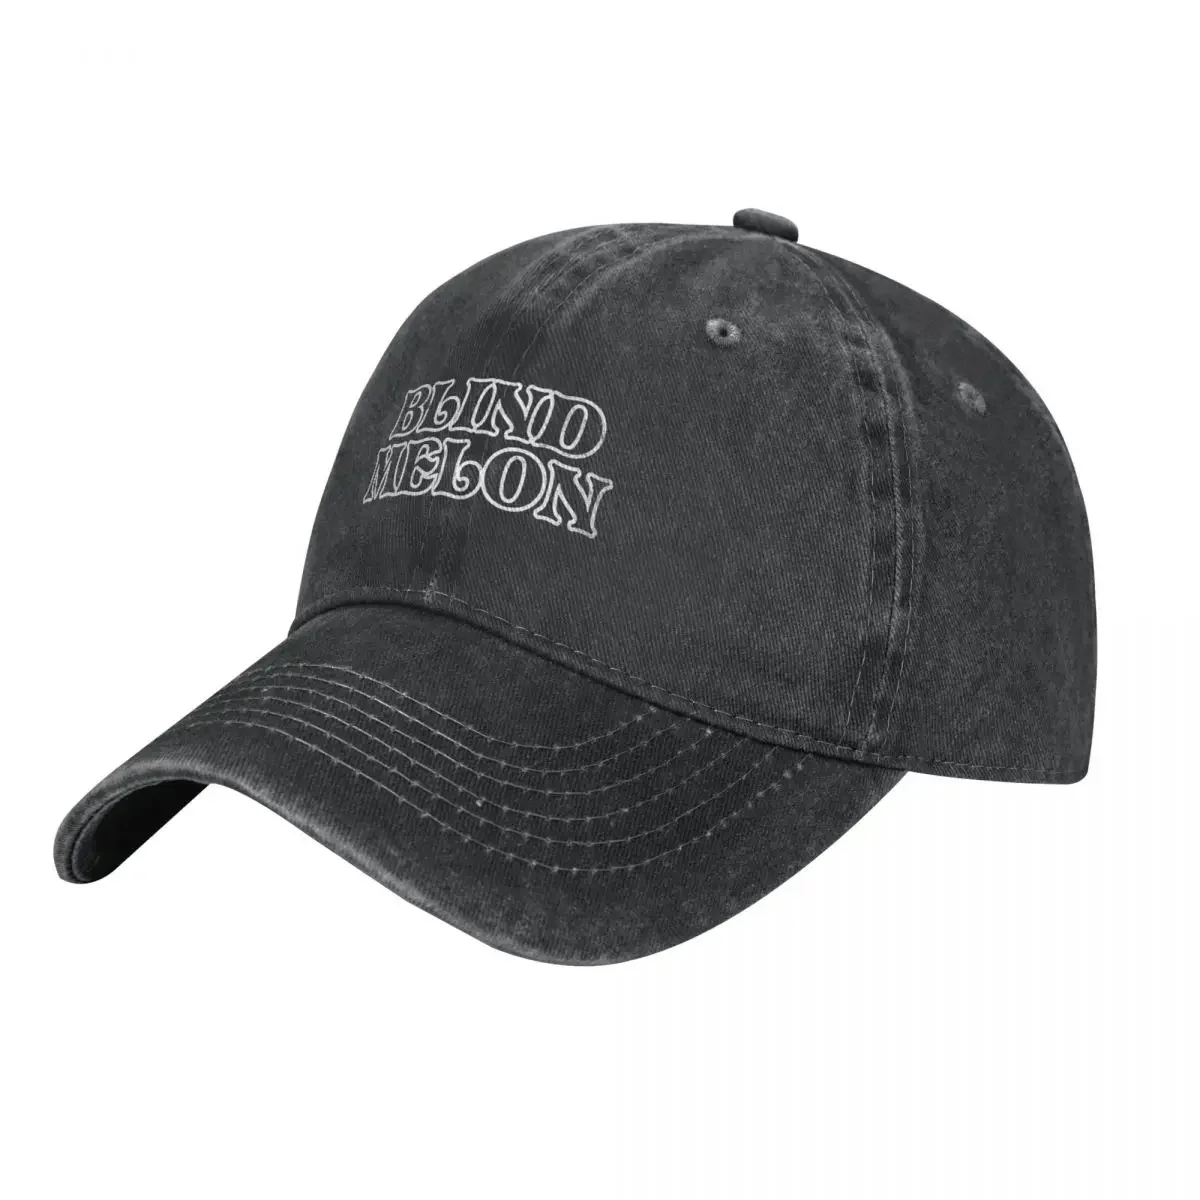 Double Melon Cowboy Hat Golf Cap Luxury Brand Beach Hats For Women Men's